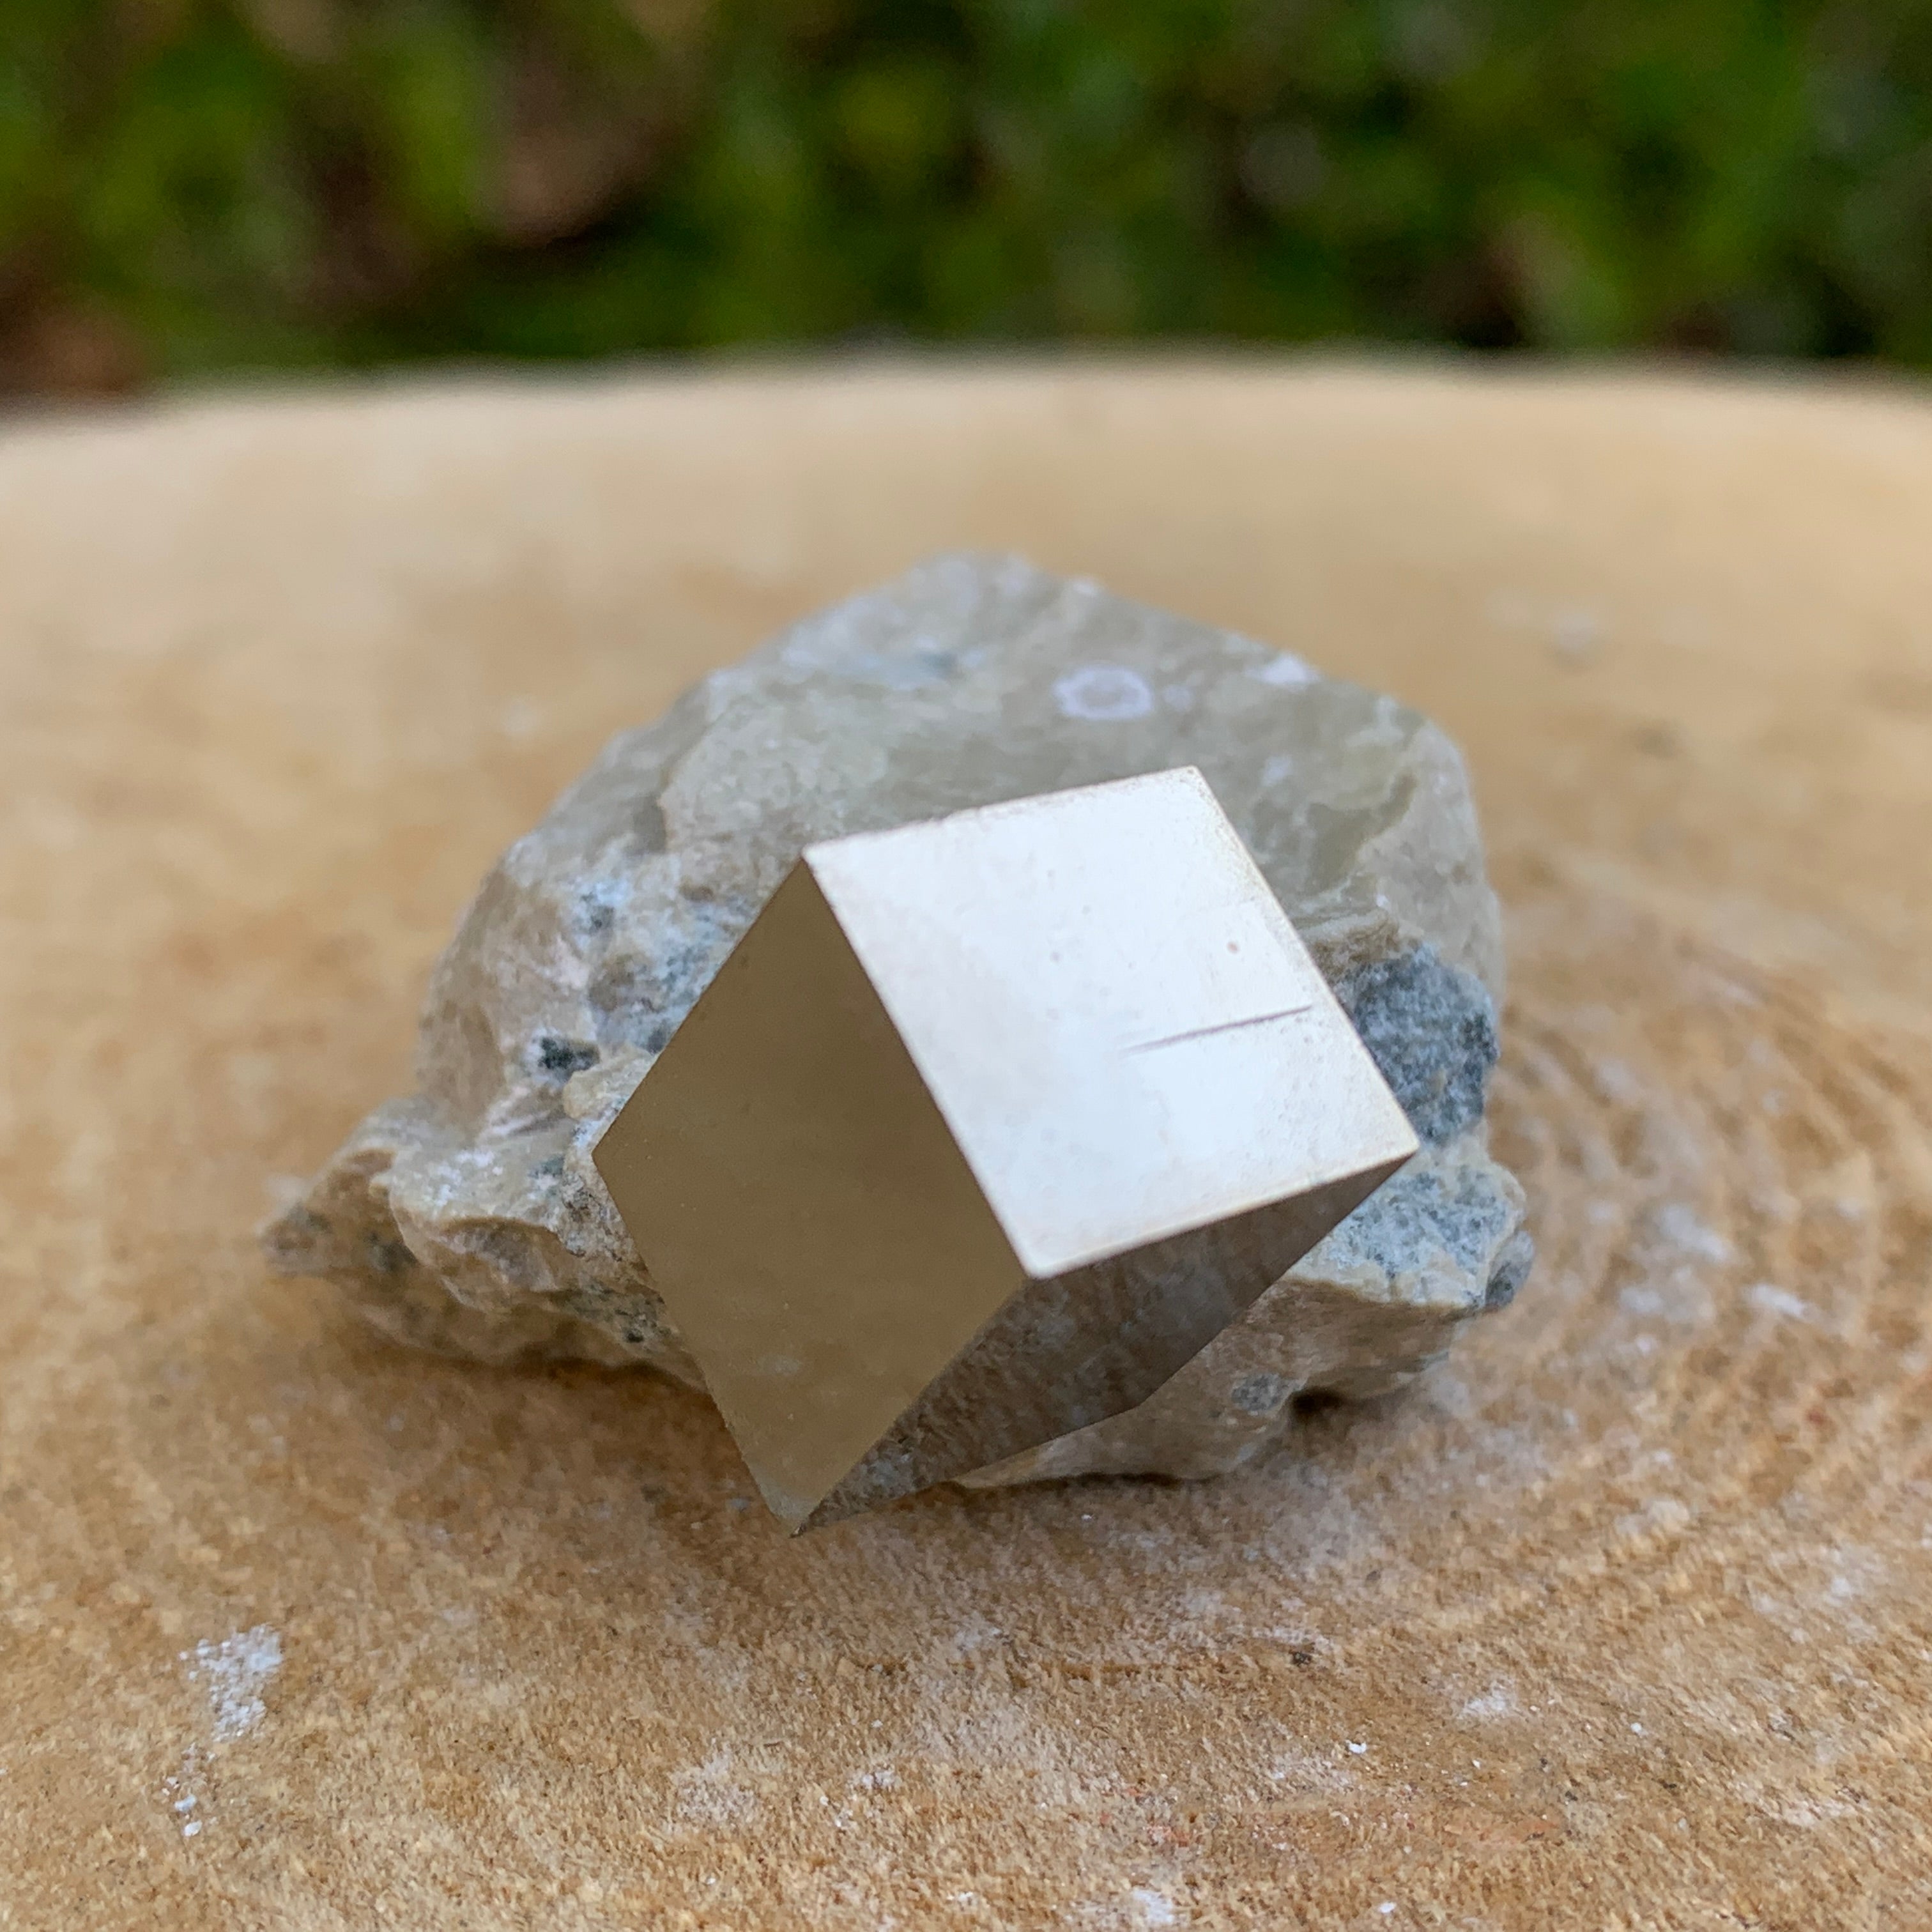 36.0g 3x3x3cm Matrix Silver Spanish Pyrite from Spain